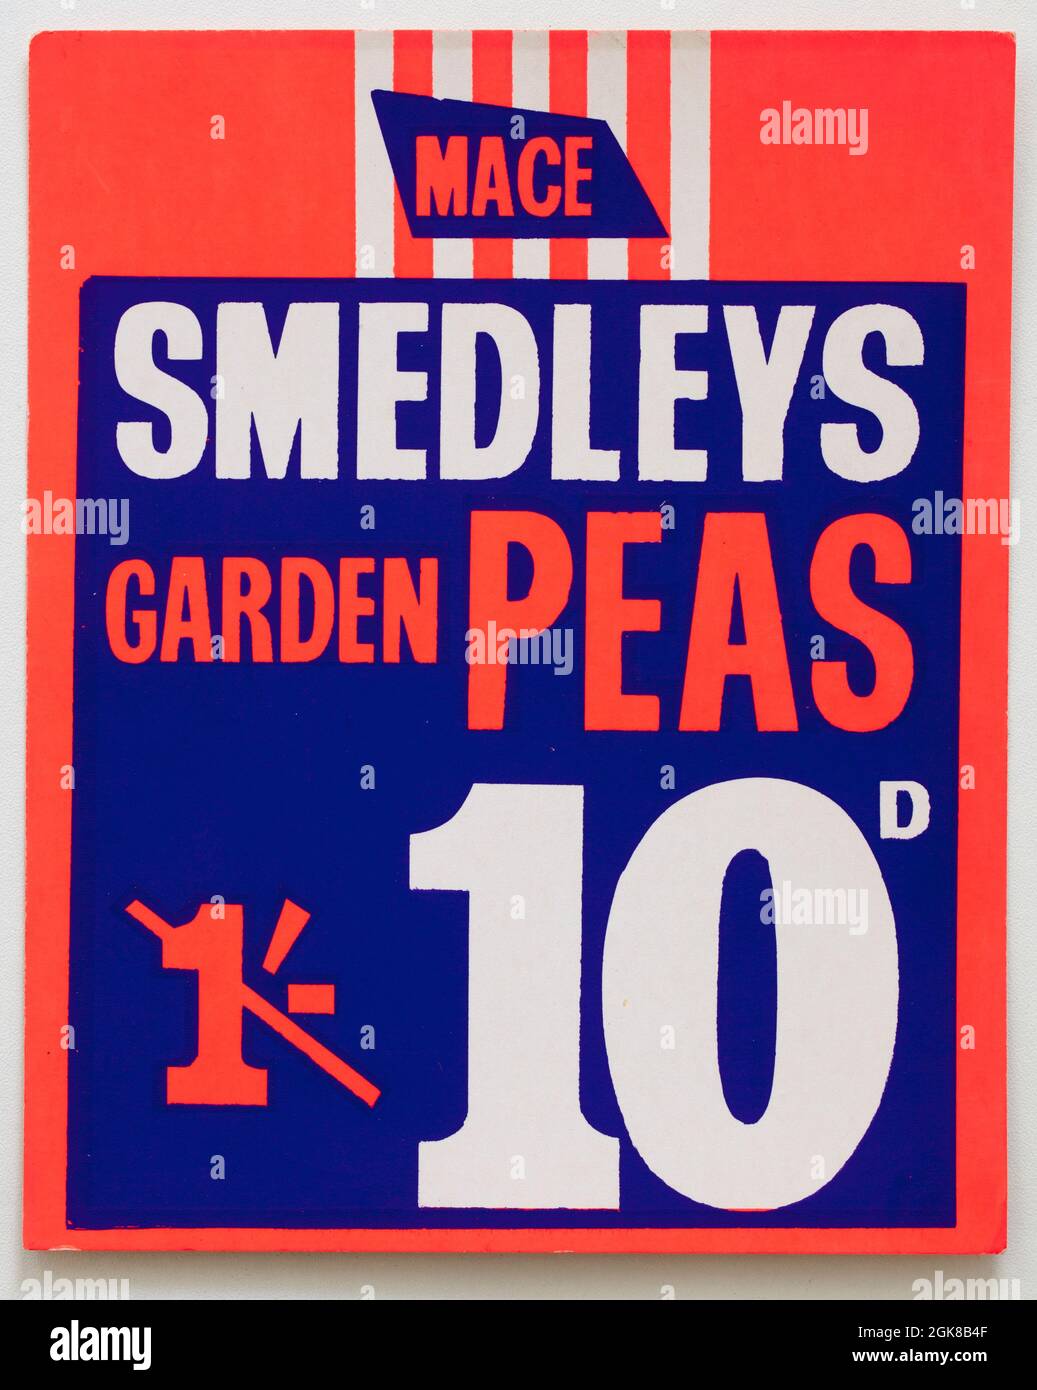 Vintage 1960s Mace Shop Price Display Card - Smedleys Peas Stock Photo